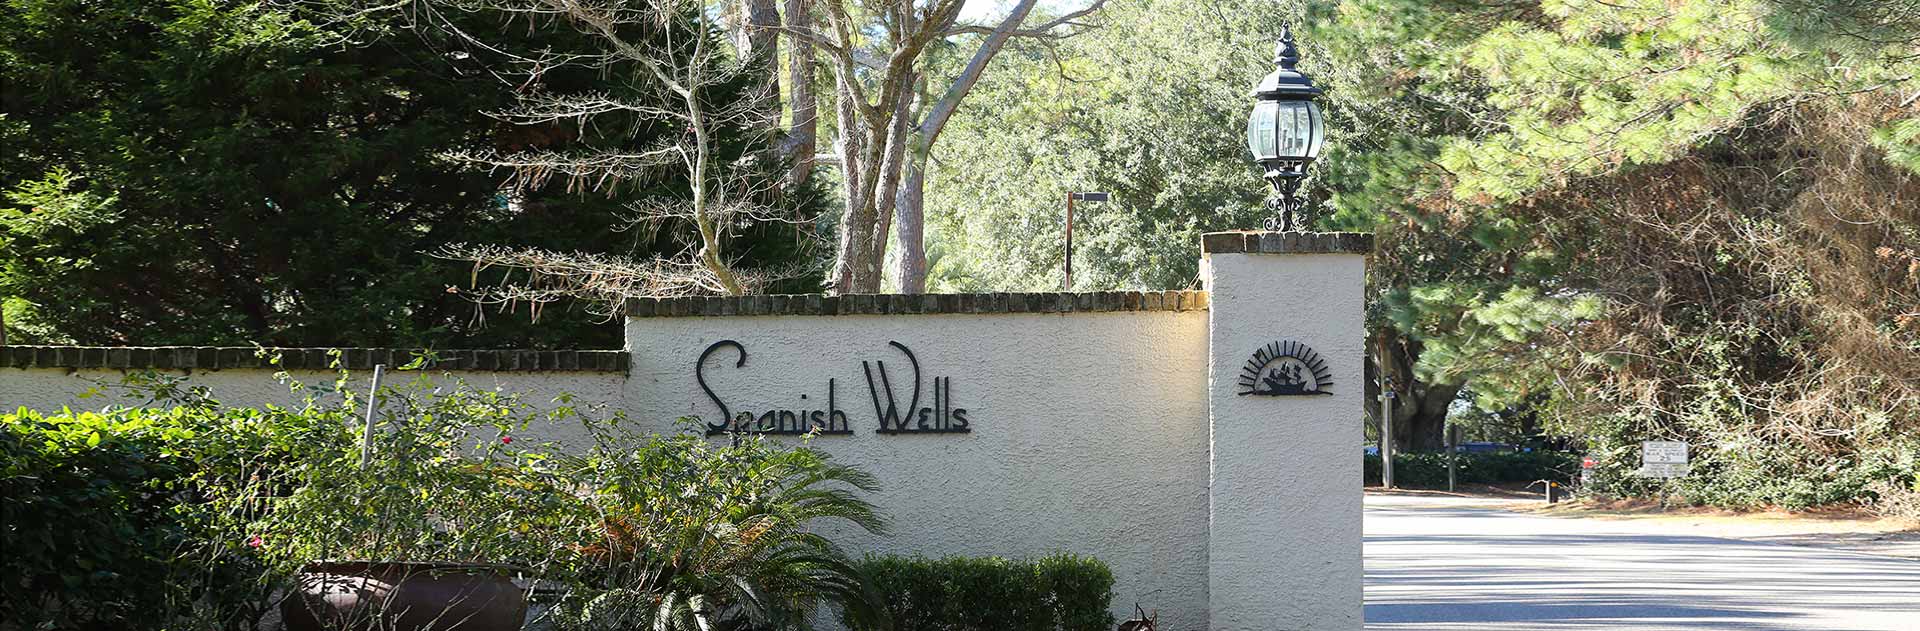 Spanish Wells Hilton Head Community Sign